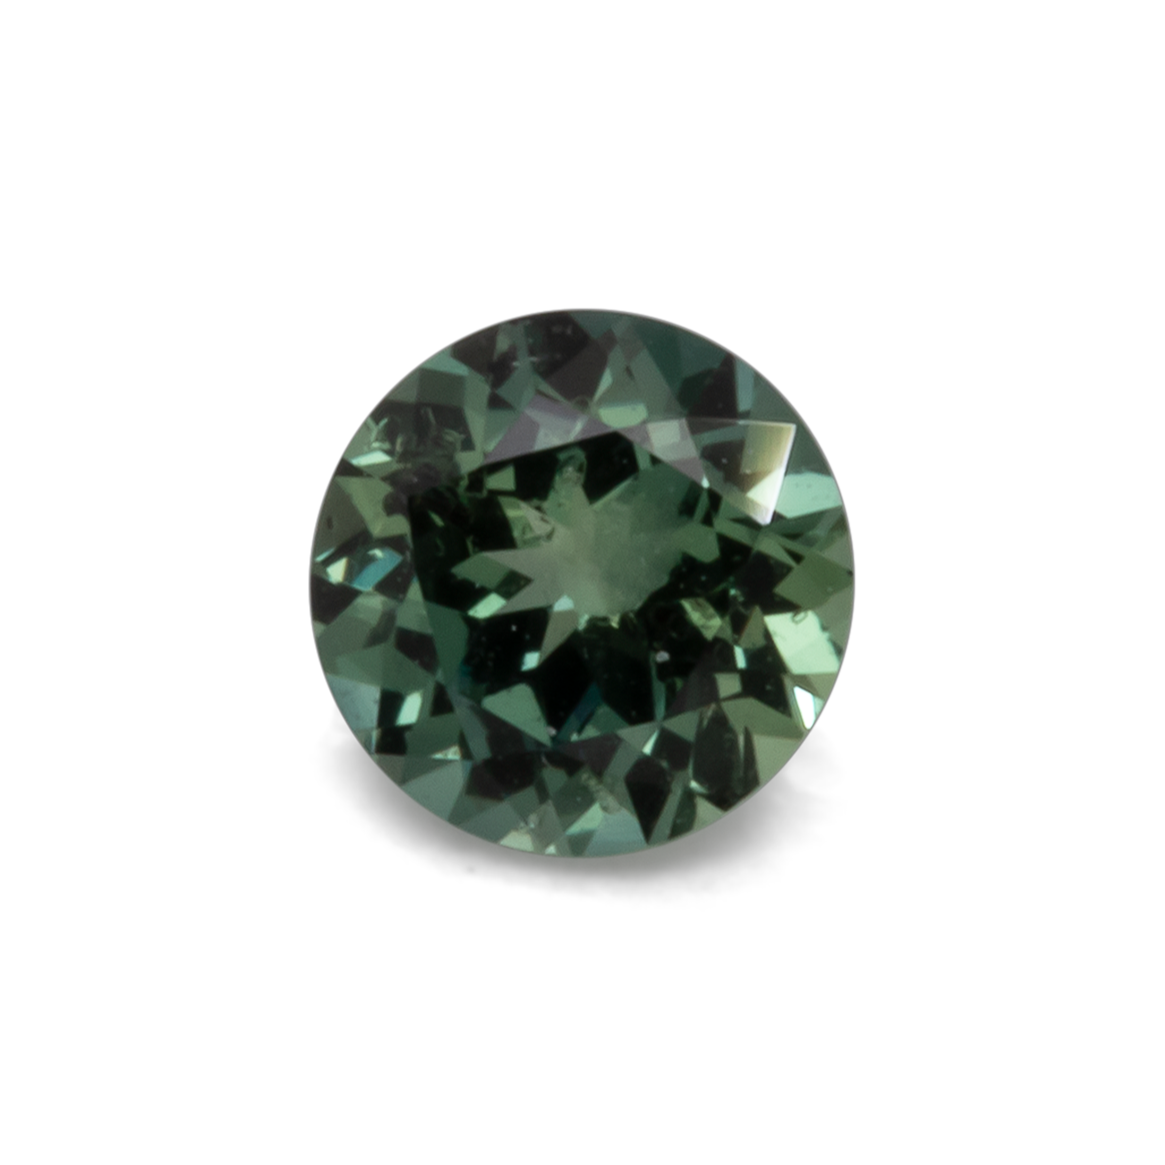 Saphir - blau/grün, rund, 4,1x4,1 mm, 0,30 cts, Nr. XSR11211